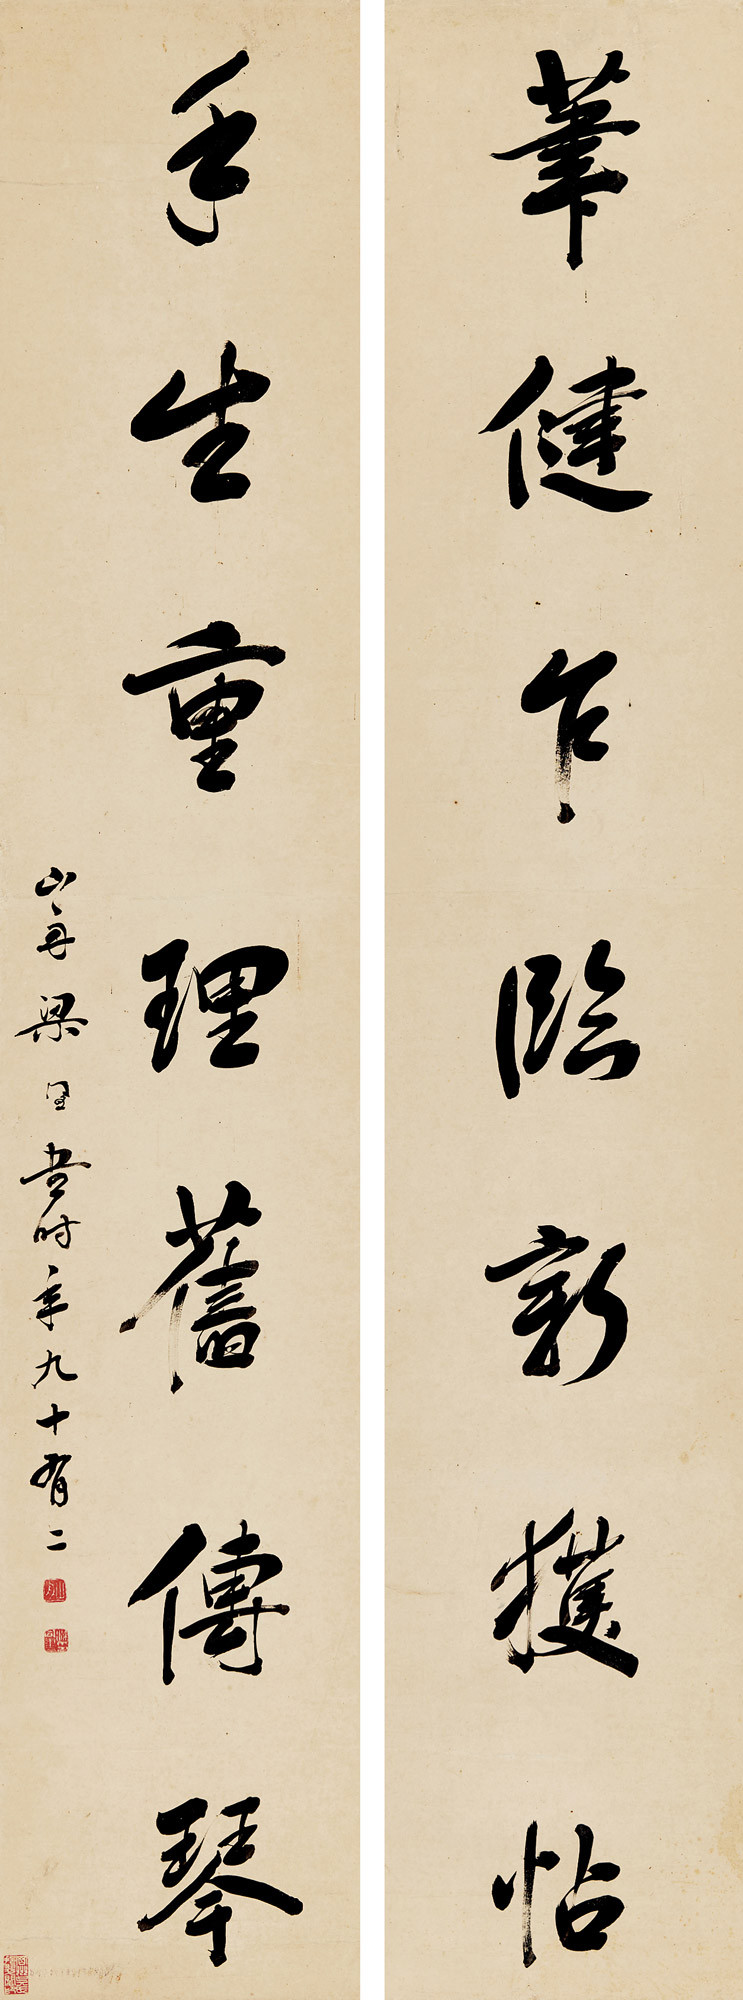 Seven- Characters Calligraphic Couplet in Running Script